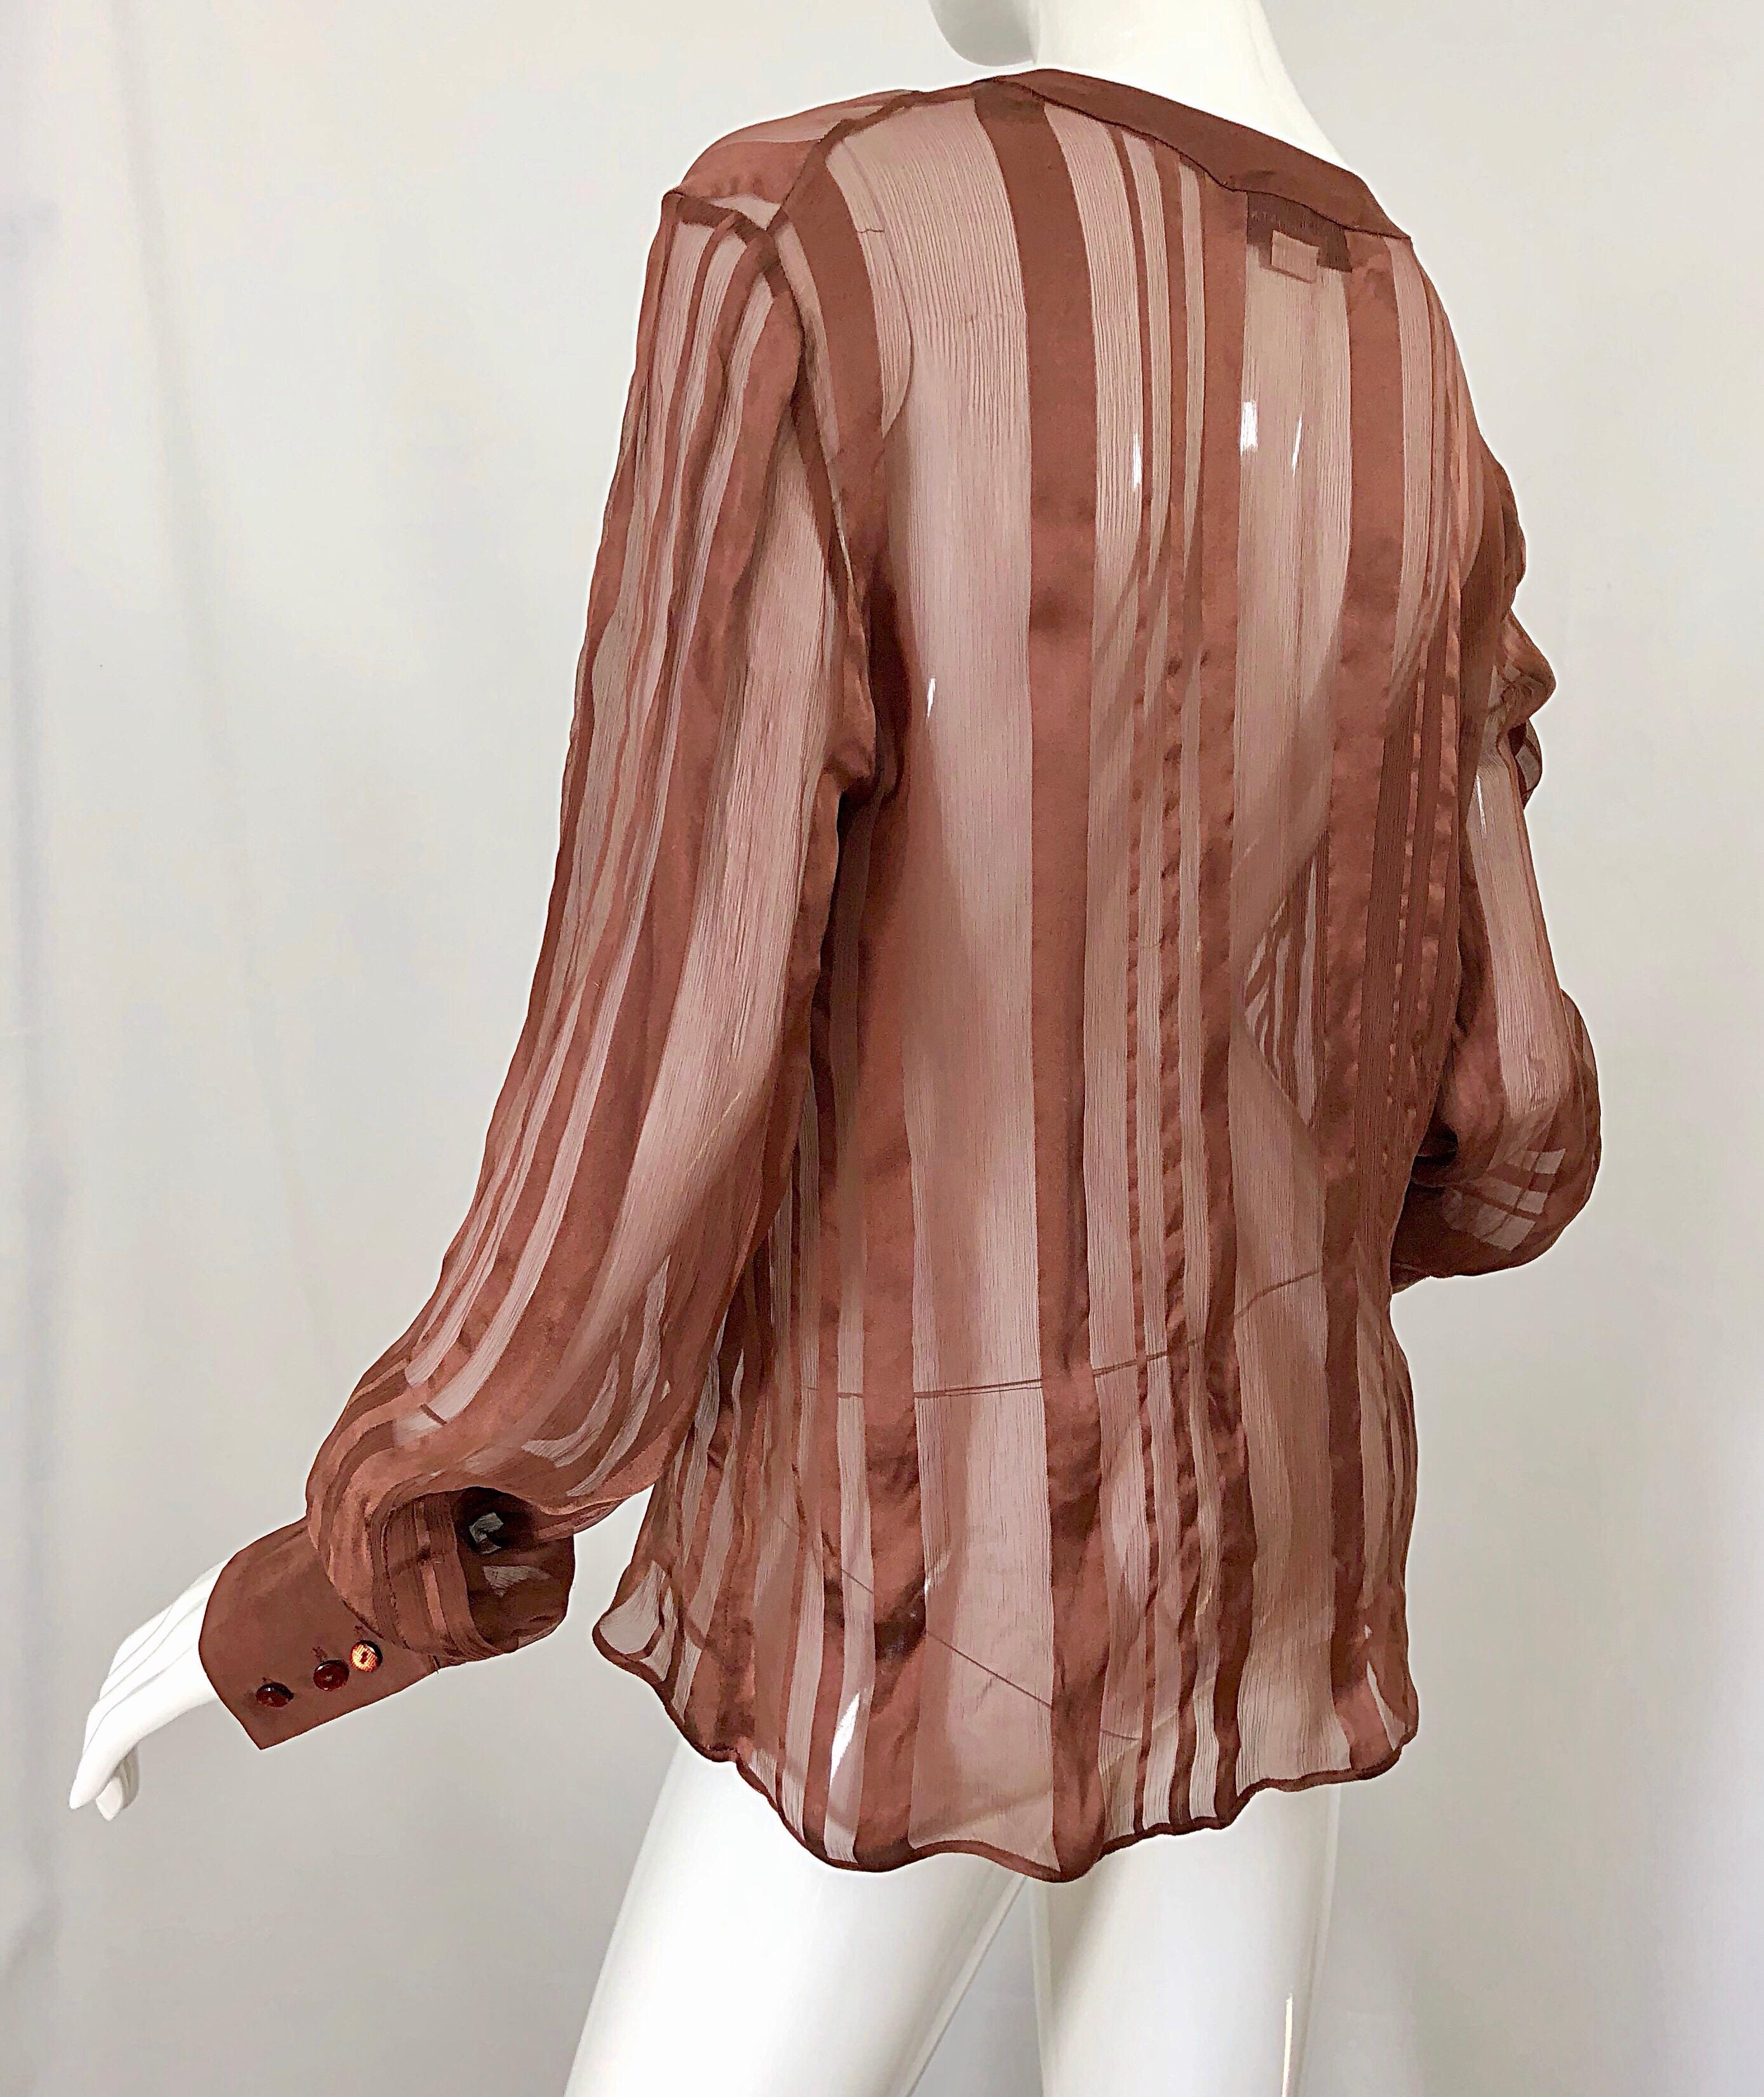 STELLA MCCARTNEY Rust Brown Silk Chiffon Avant Garde Semi Sheer Blouse Shirt Top 1